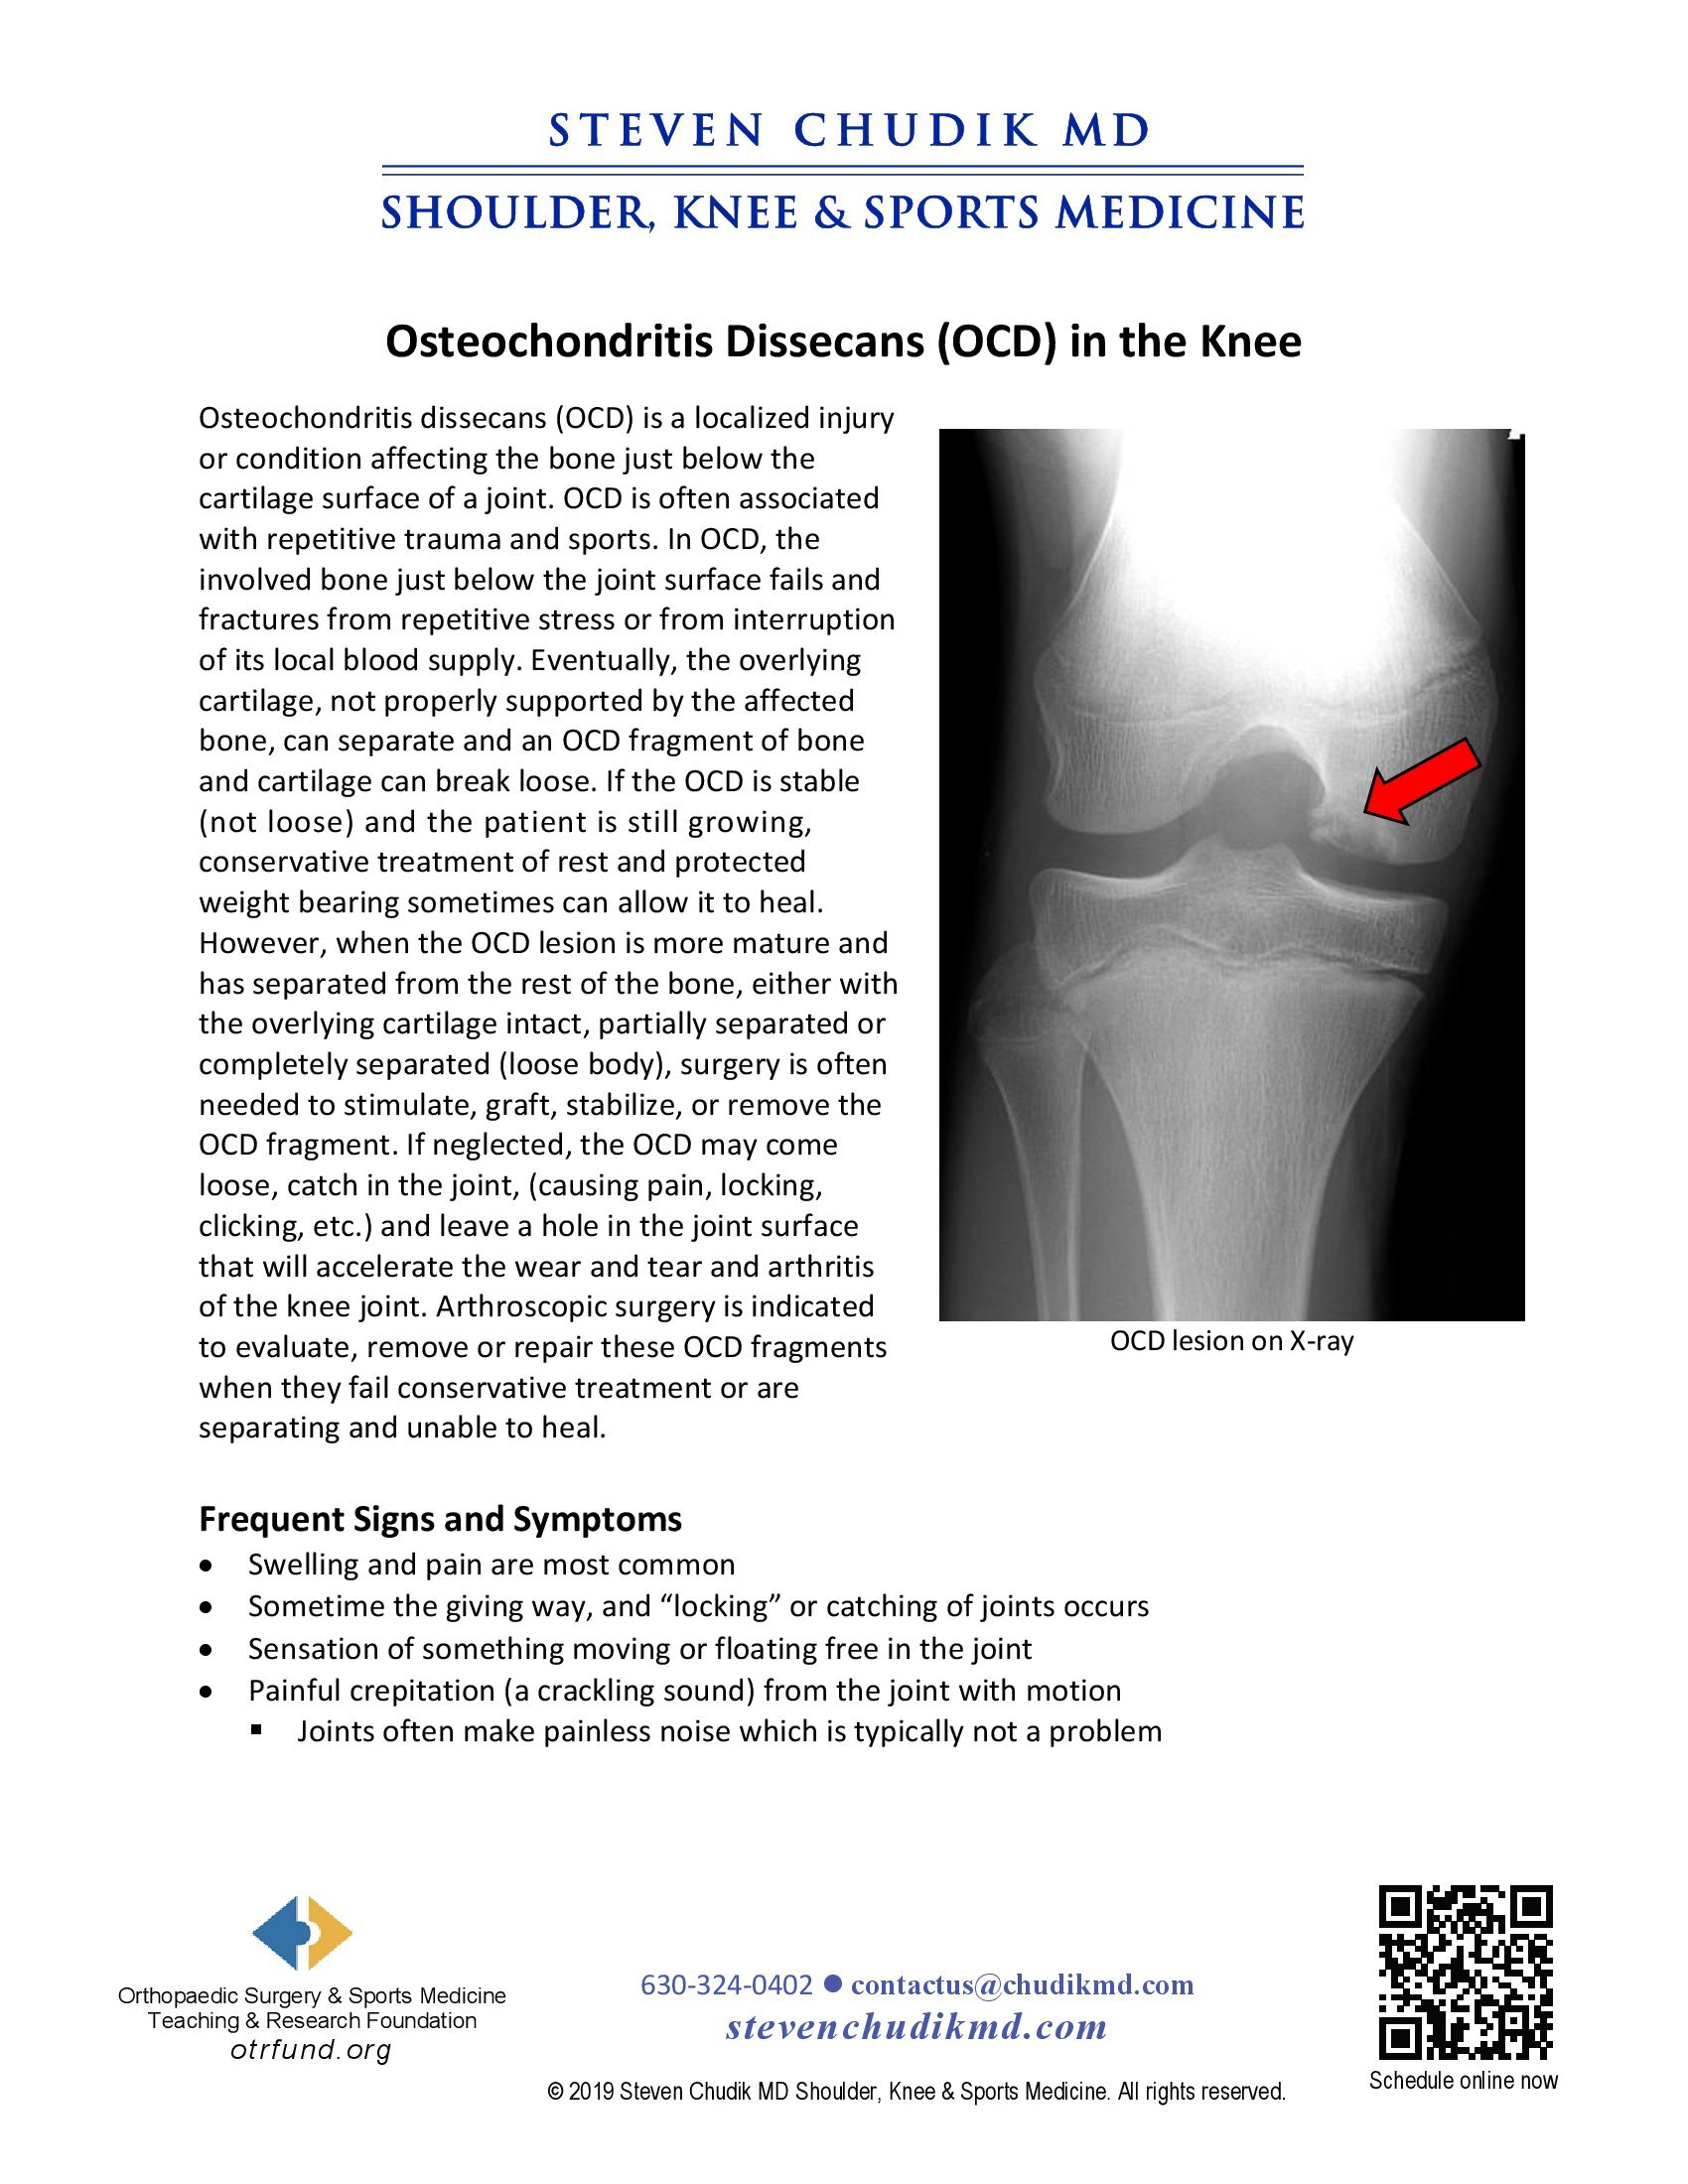 Osteochondritis Dissecans (OCD) - Steven Chudik MD